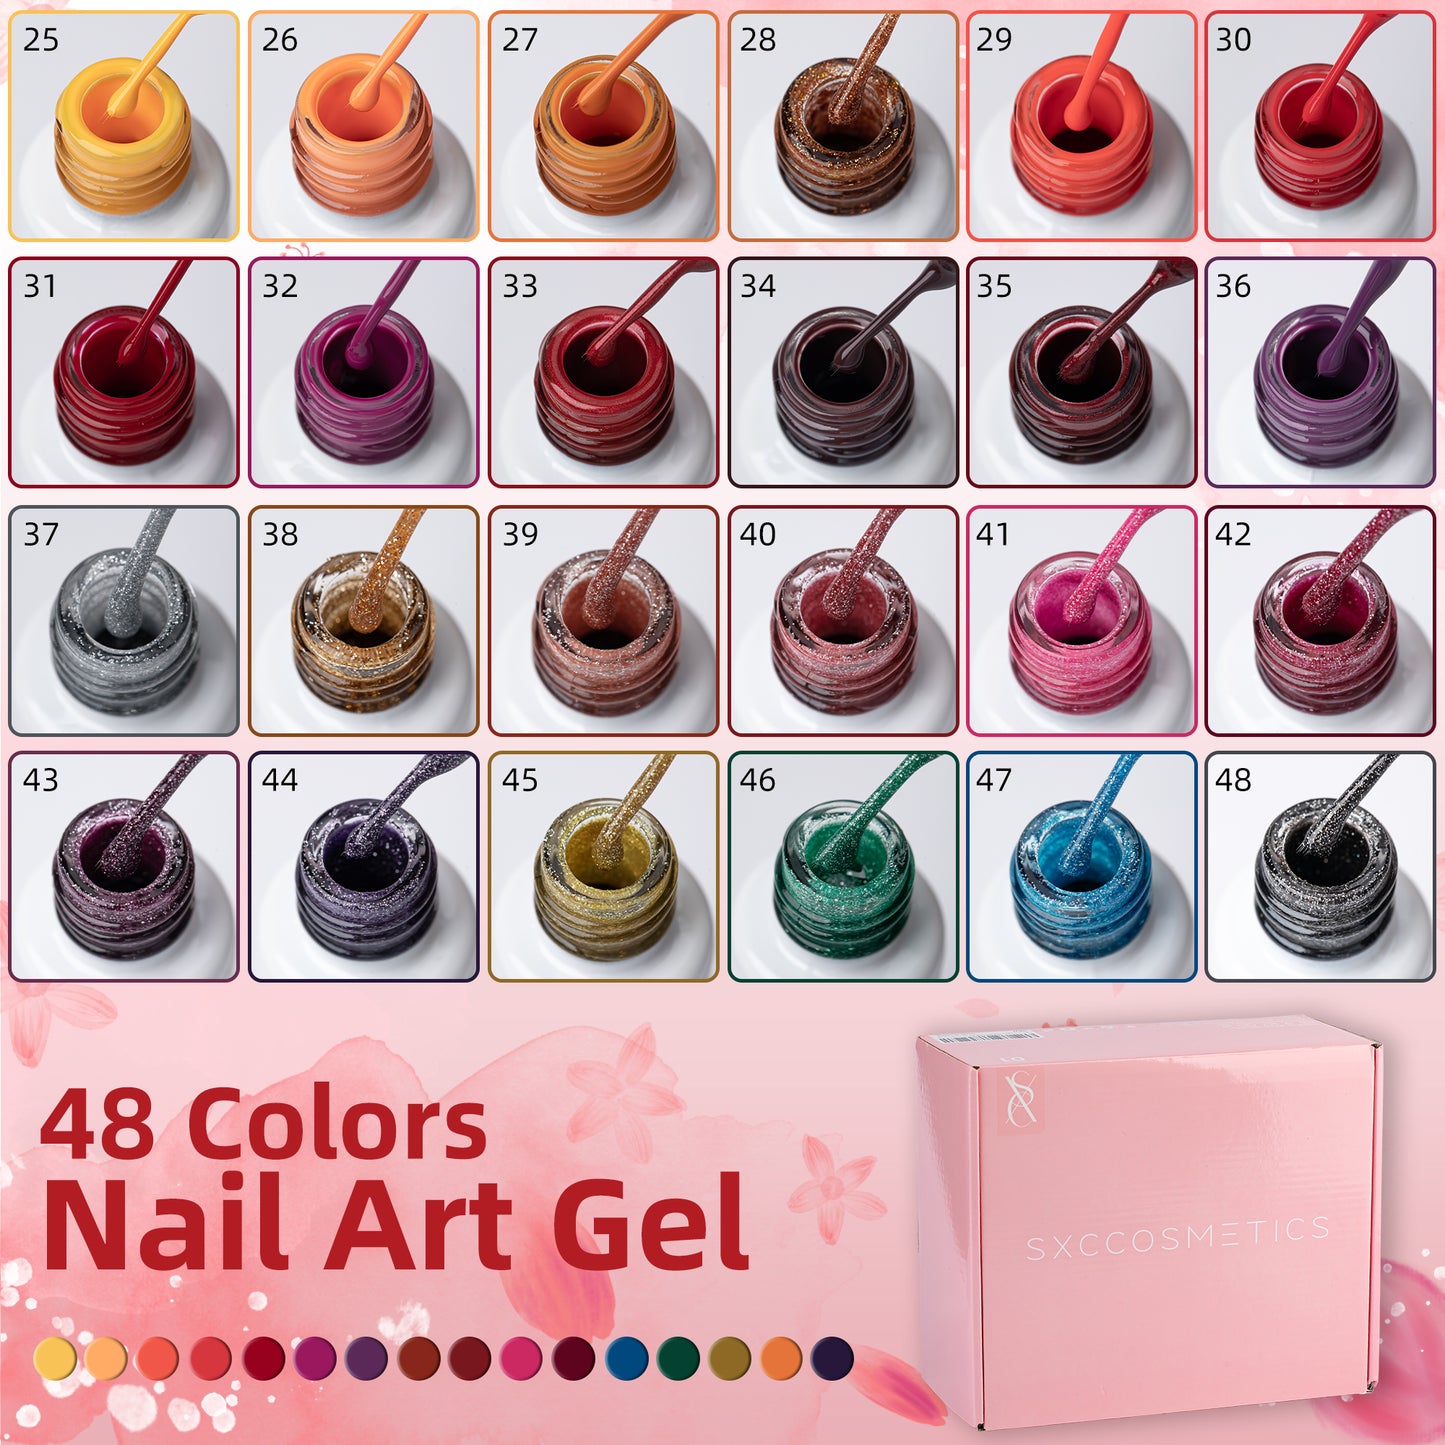 SXC Cosmetics 48 Colors Nail Art Dream Liners Max Series